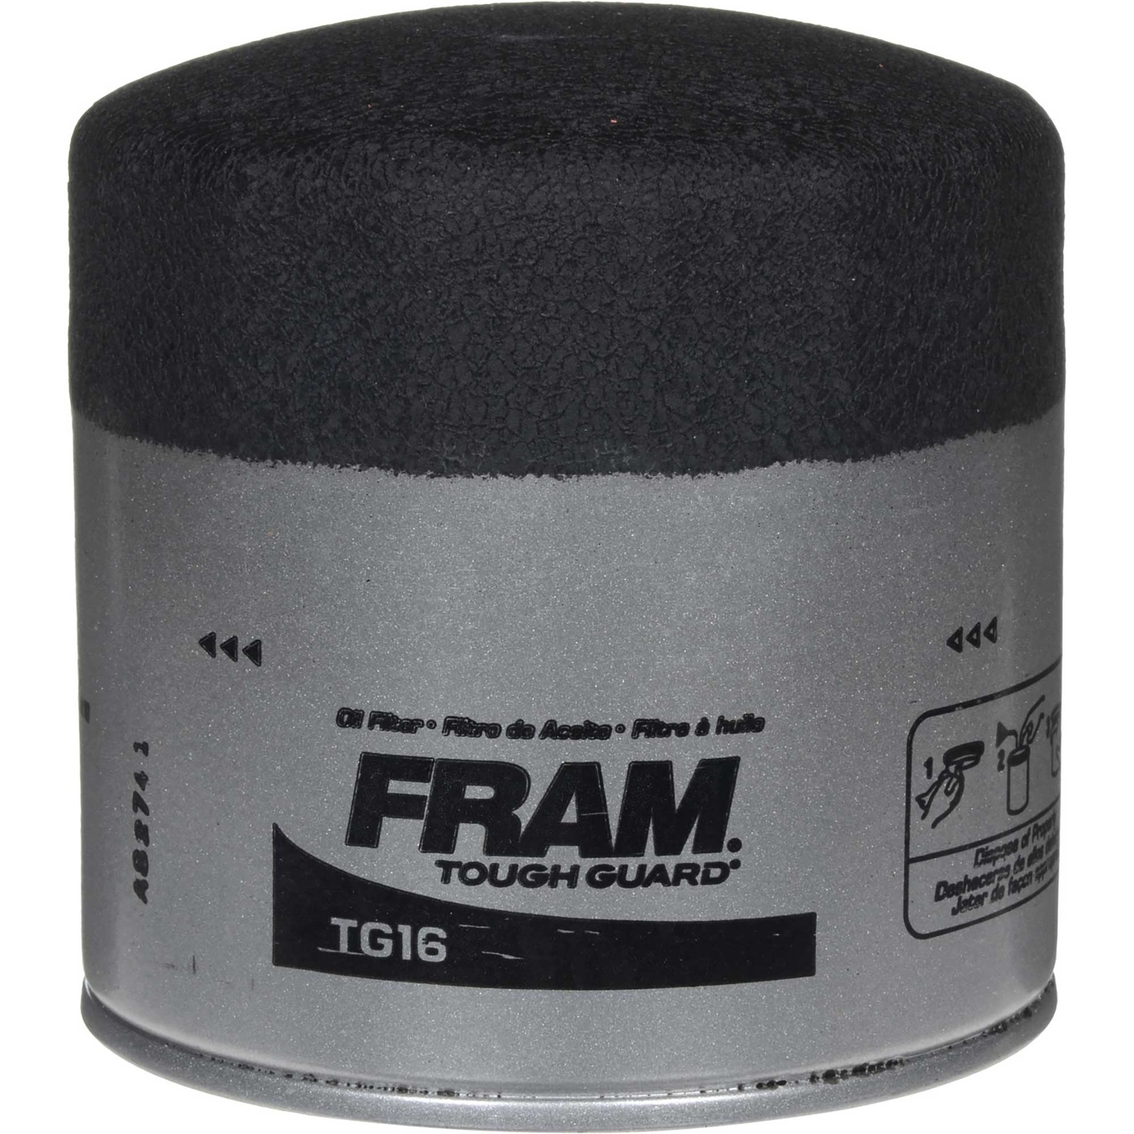 FRAM Tough Guard Spin On Oil Filter, TG16 - Image 2 of 2